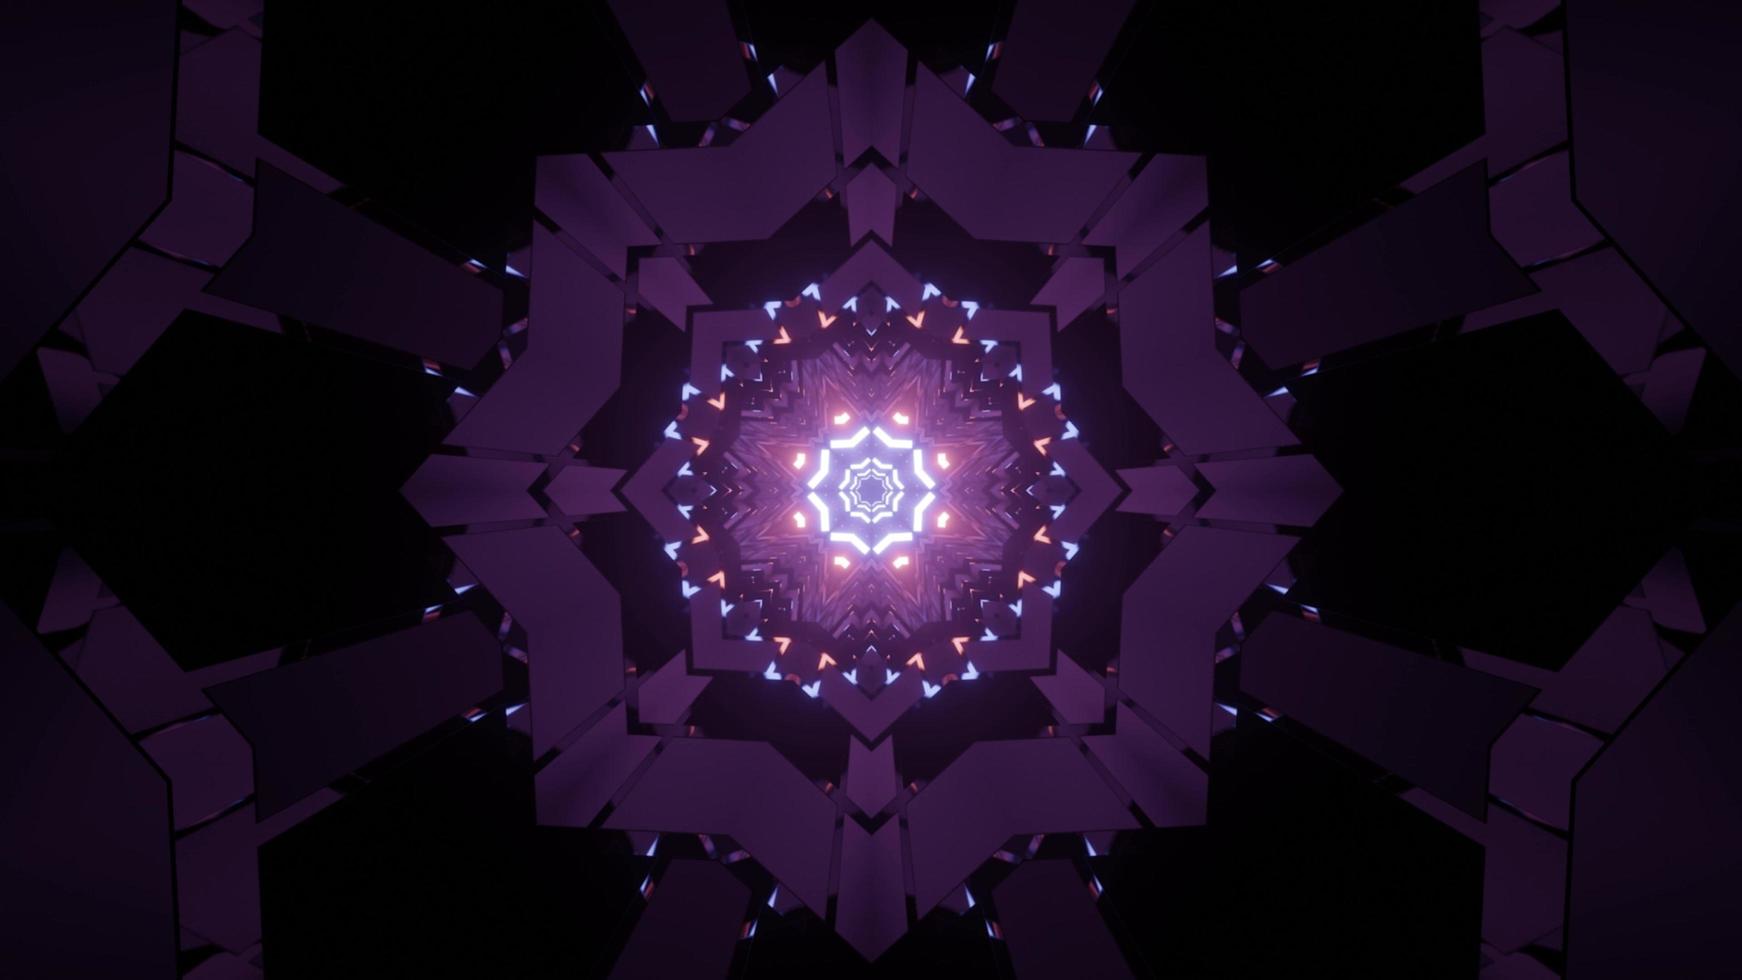 Futuristic purple geometric neon illumination 3d illustration photo